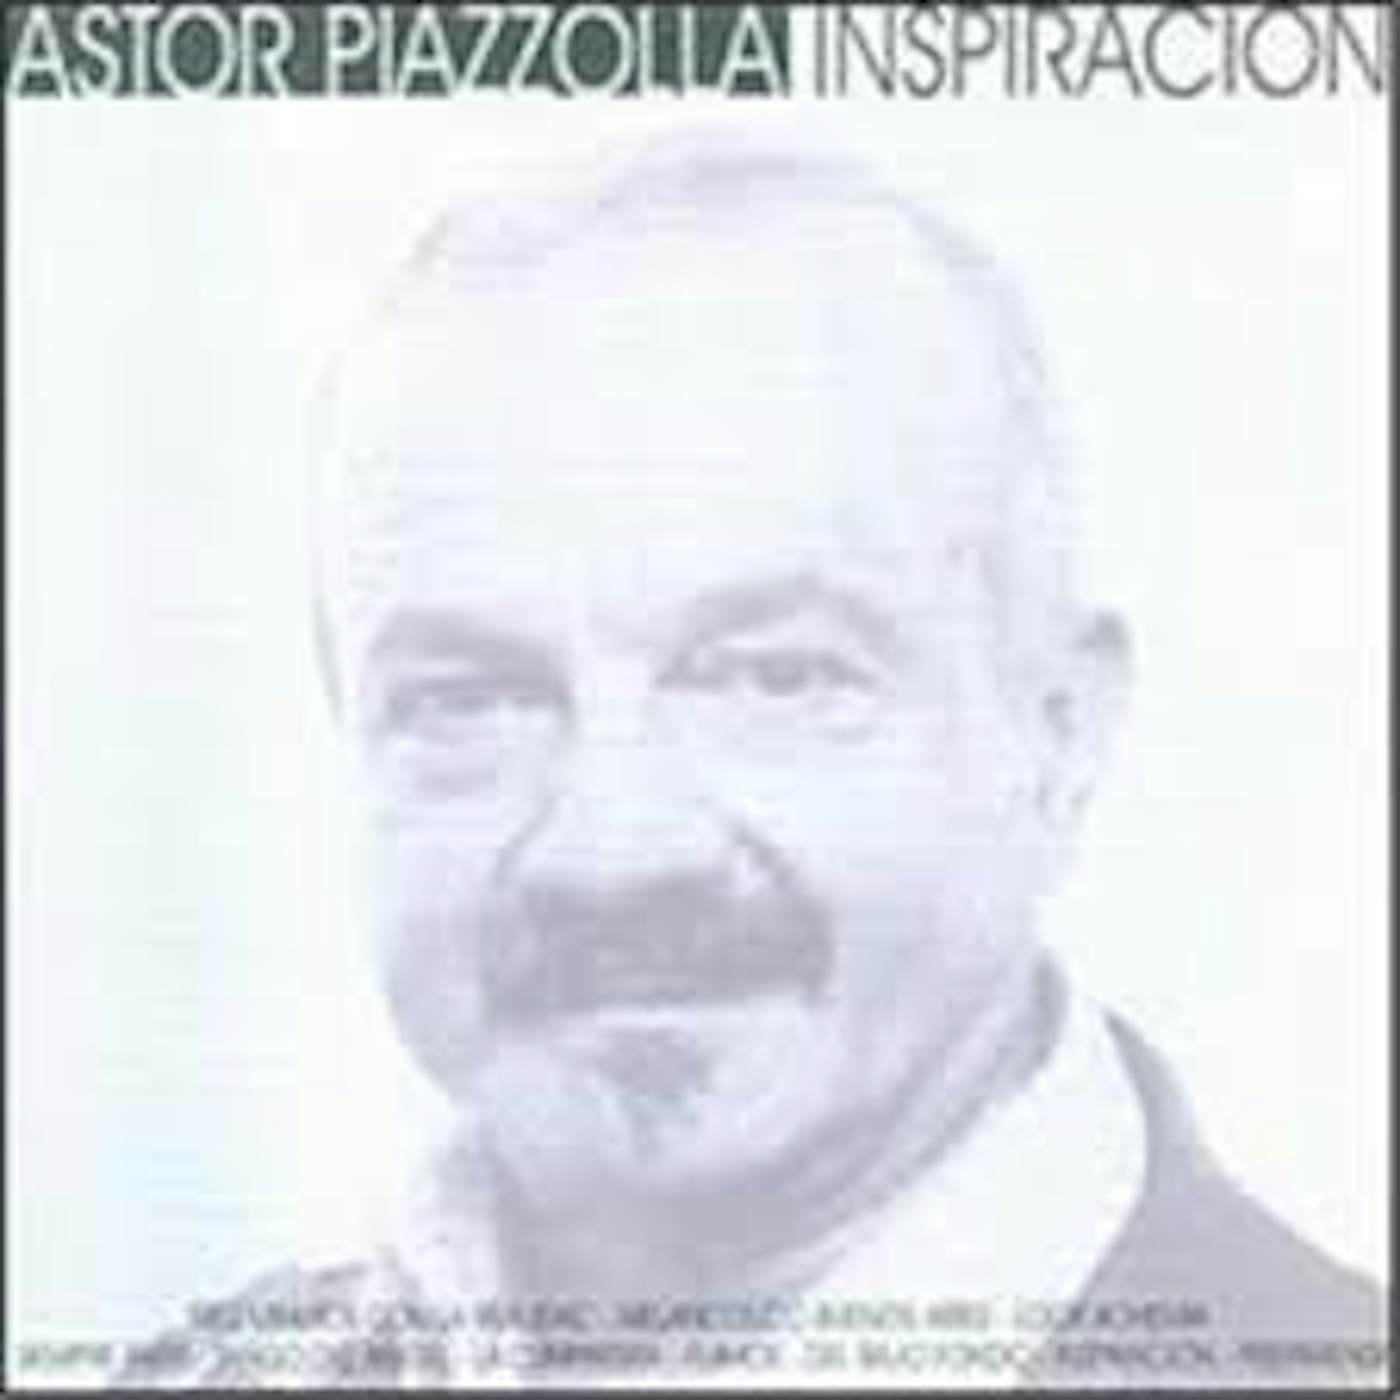 Astor Piazzolla INSPIRACION CD